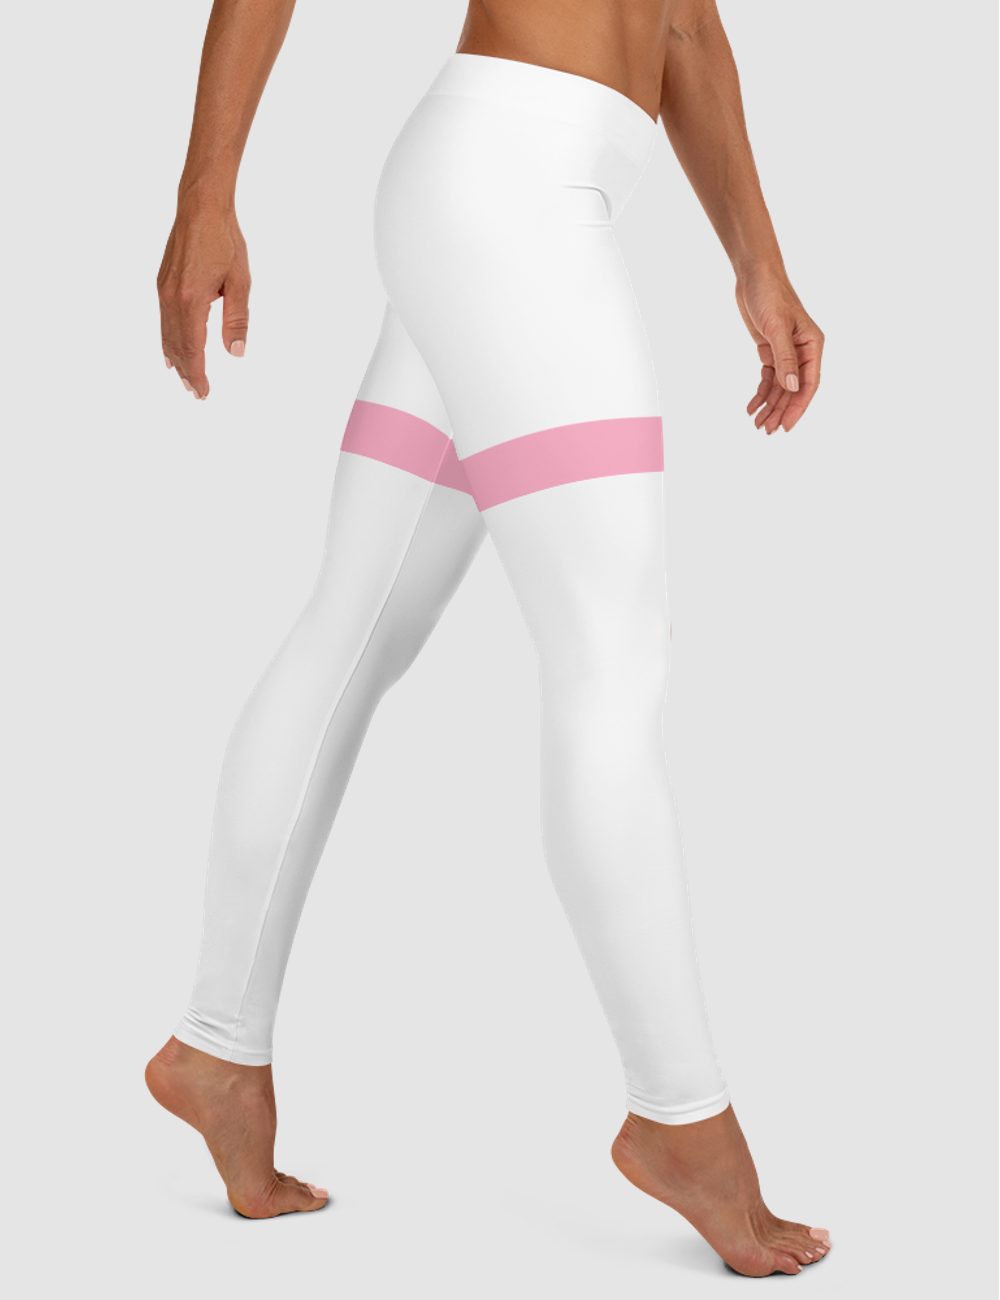 White And Pink Thigh Striped Print | Women's Standard Yoga Leggings OniTakai